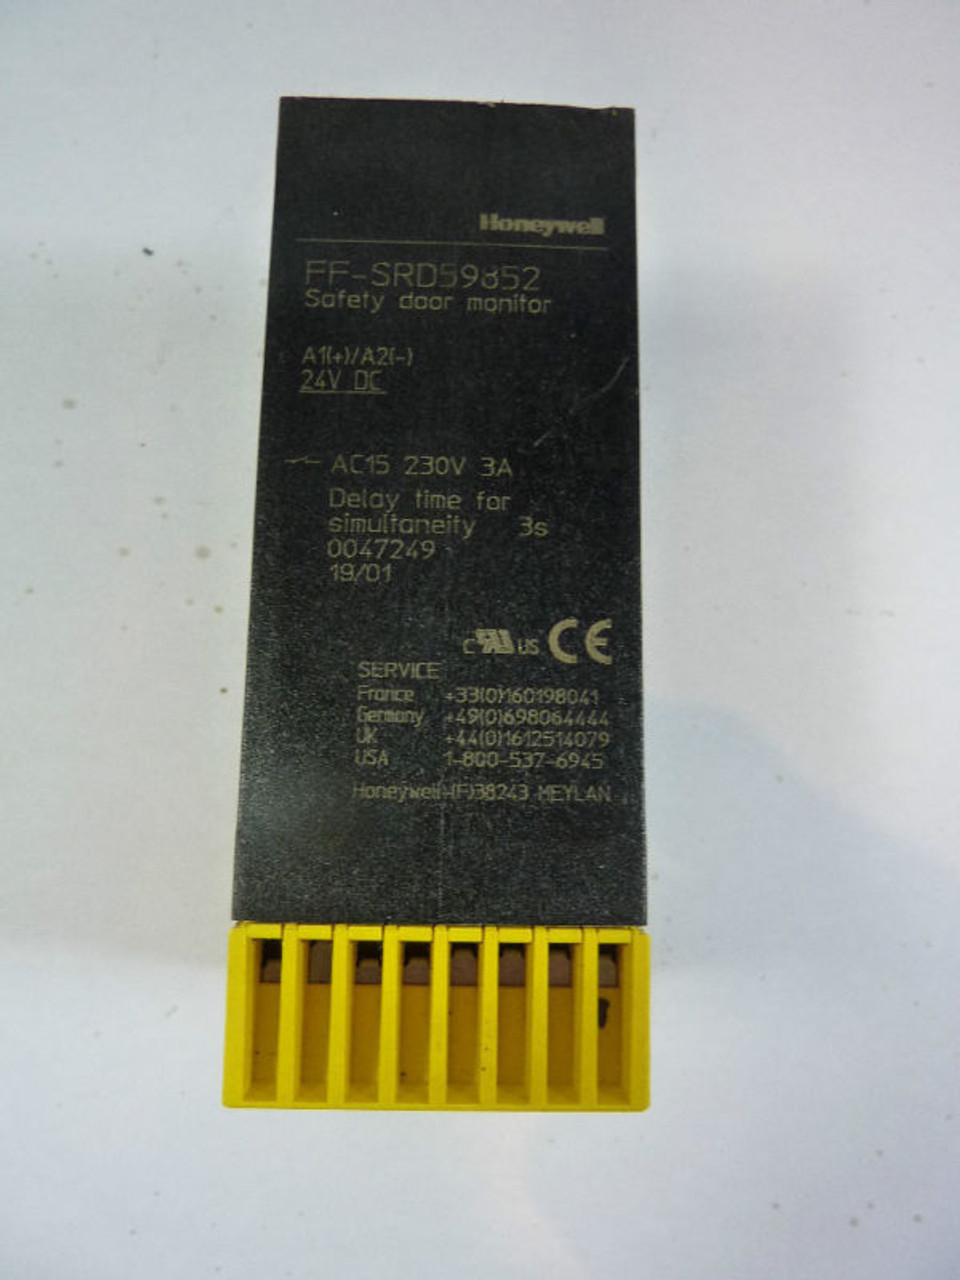 Honeywell FF-SRD59852 Door Monitor 24VDC USED